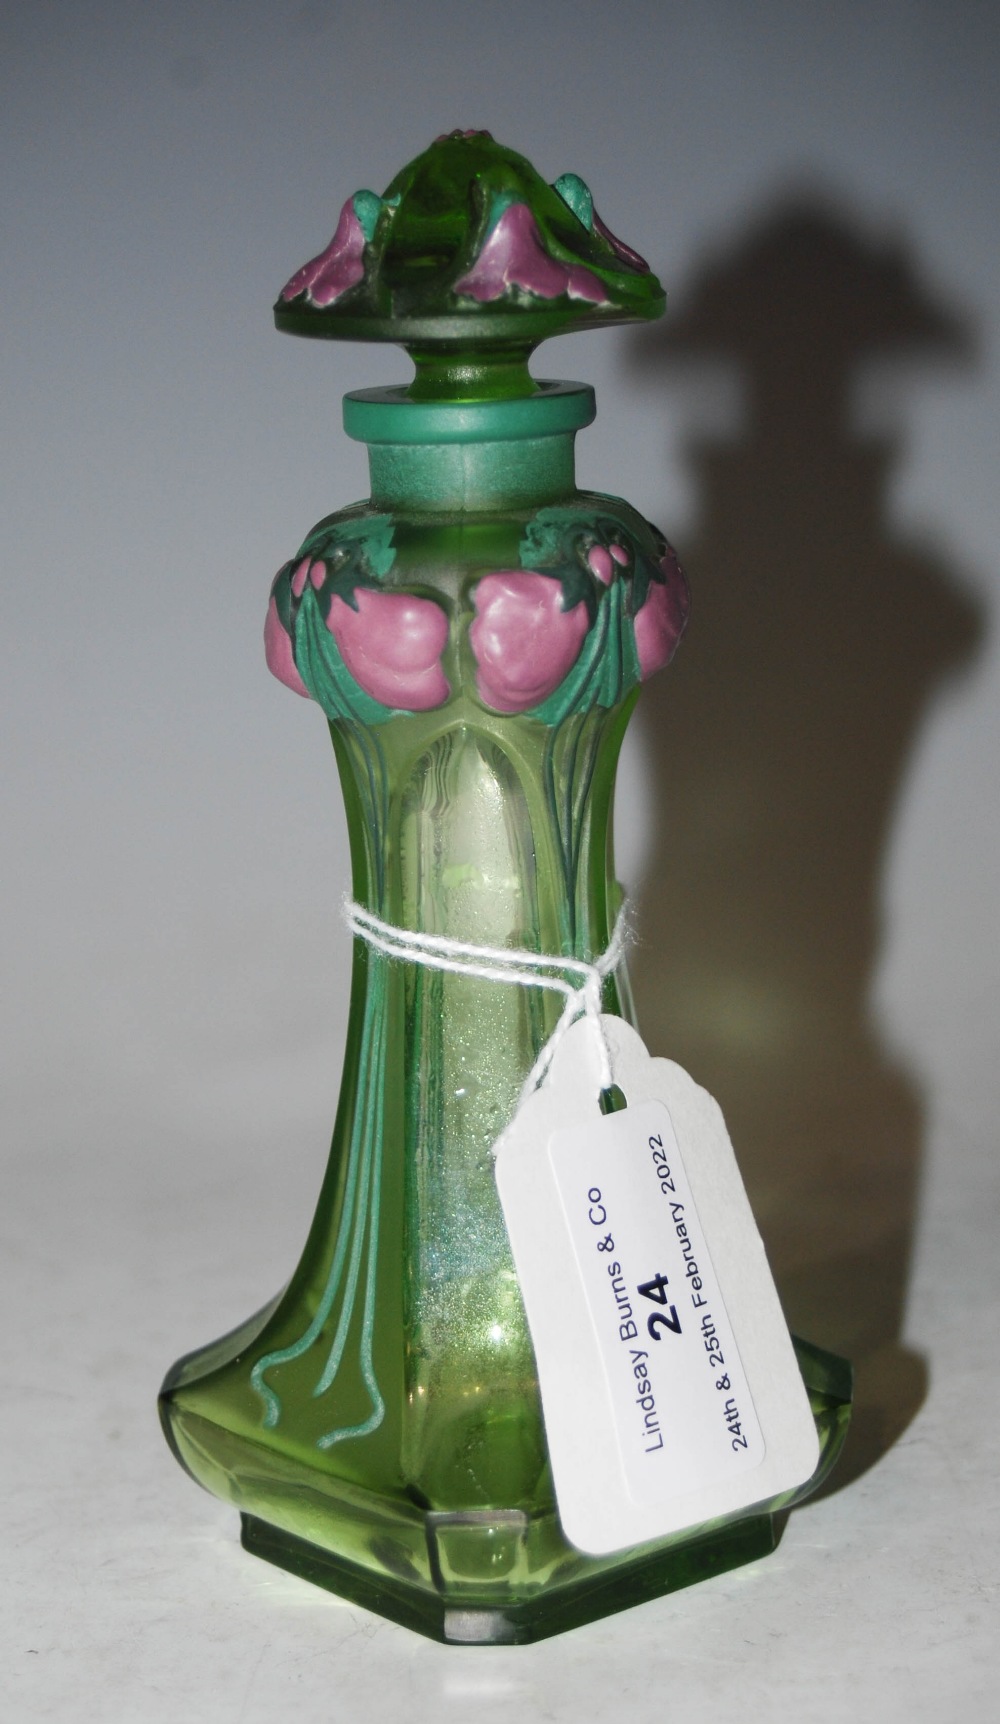 AN EARLY 20TH CENTURY ART NOUVEAU GREEN GLASS SCENT BOTTLE BY 'GABILLA, PARIS', VIOLETS PATTERN,